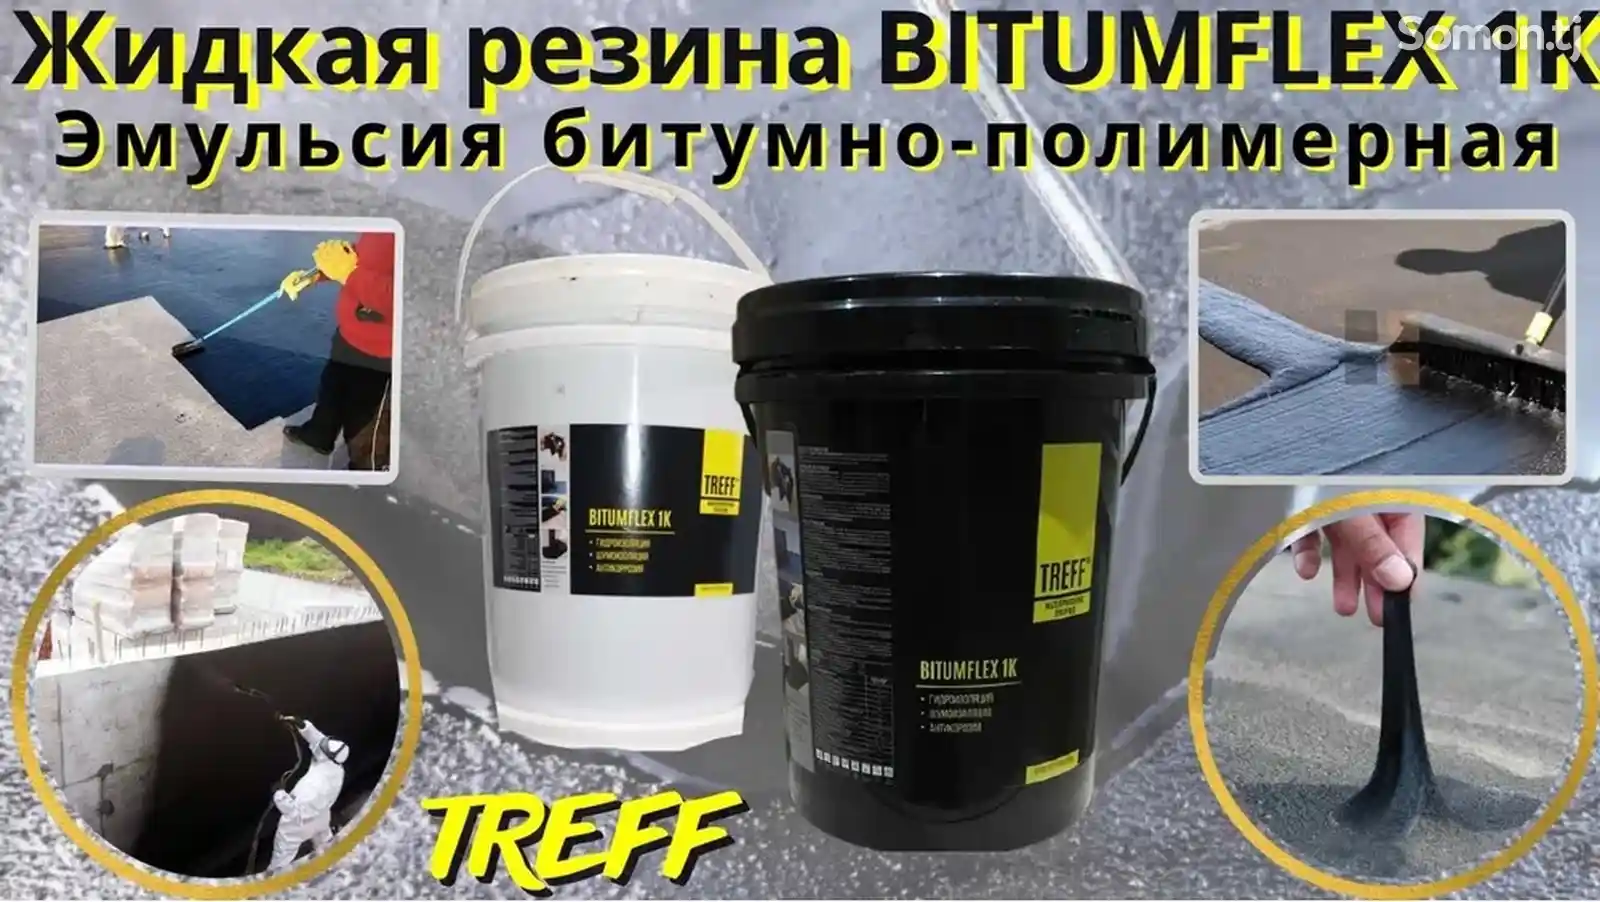 Жидкая резина Bitumflex 1K битумно-полимерная Гидроизоляция Treff-2